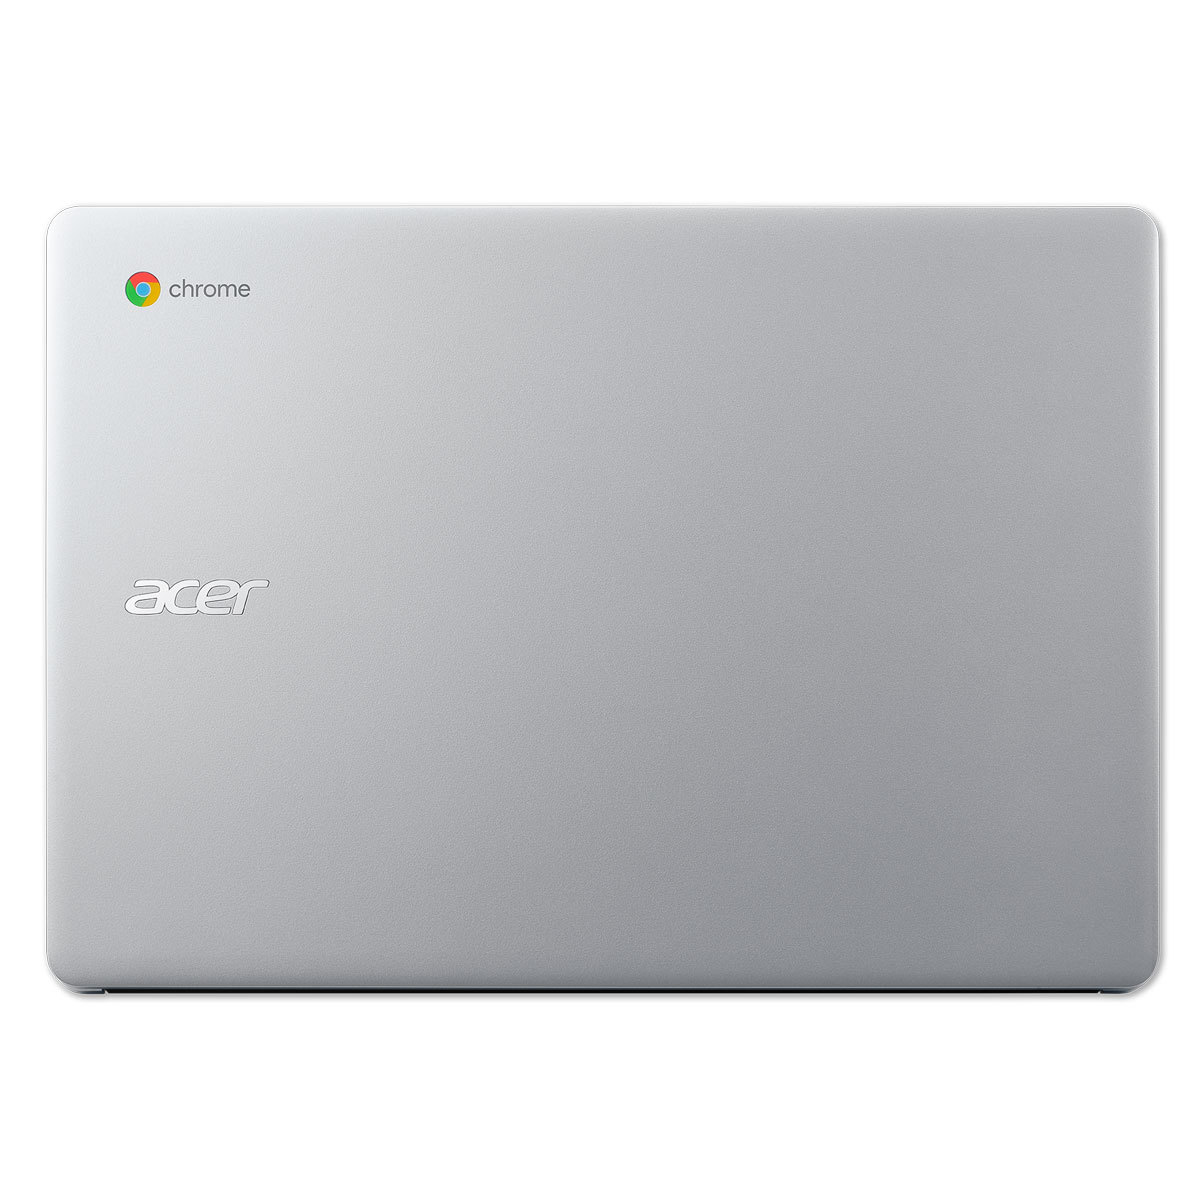 Buy Acer Chromebook, Intel Celeron, 4GB RAM, 64GB eMMC, 14 Inch Notebook, CB314-1H at Costco.co.uk